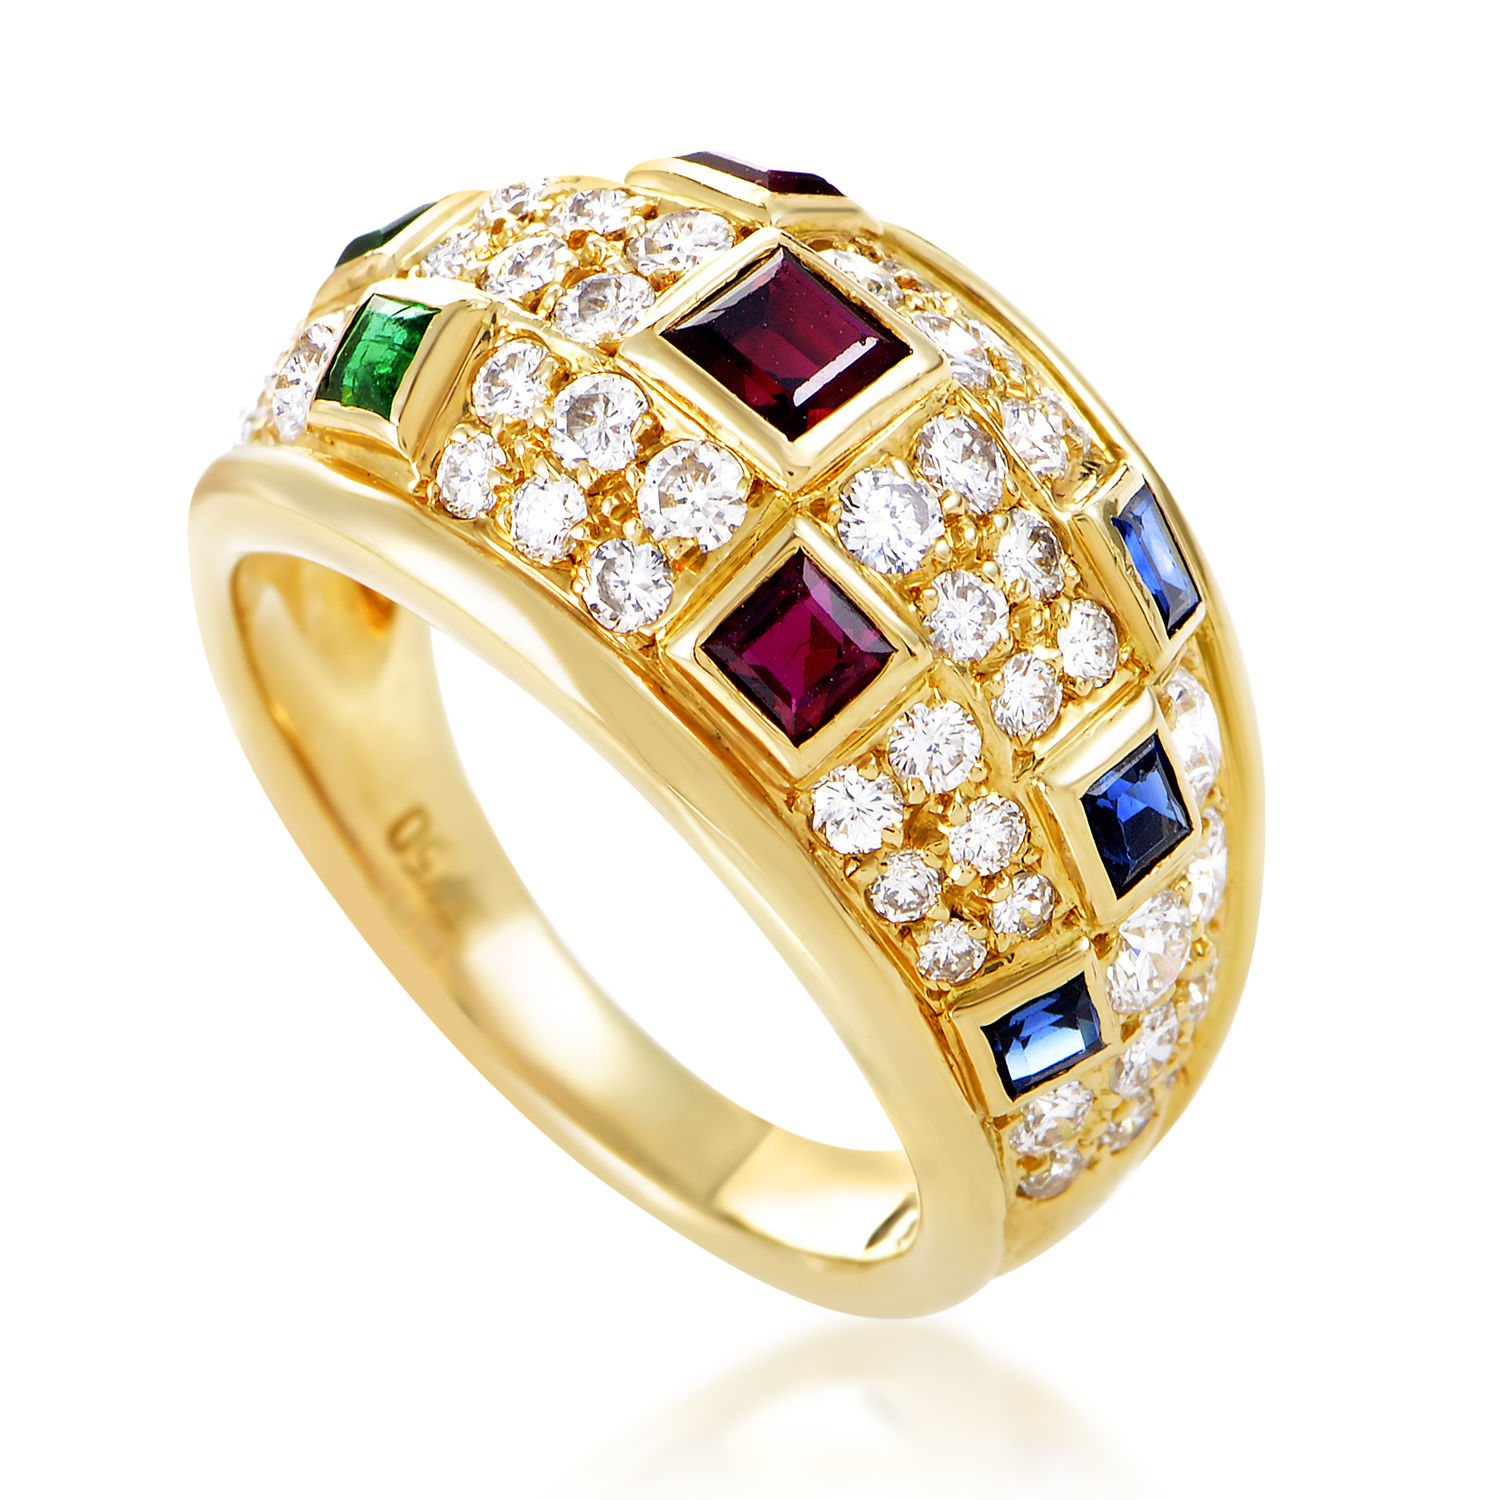 Piaget Women's 18K Yellow Gold Precious Gemstone Band Ring